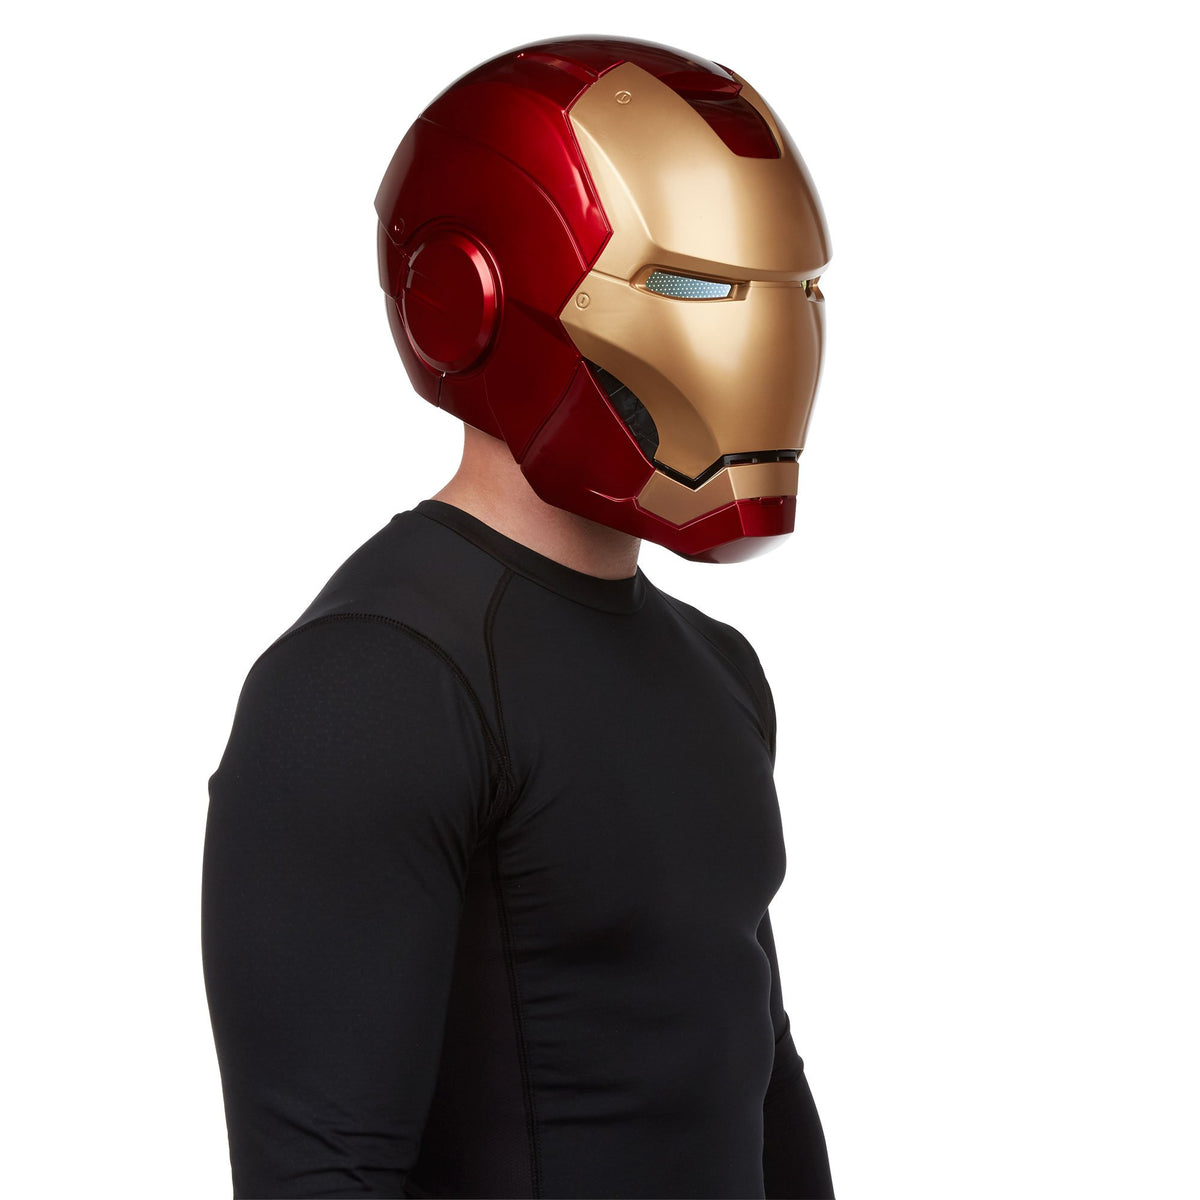 Marvel Legends Series Electronic Iron Man Helmet. New/Unopened.